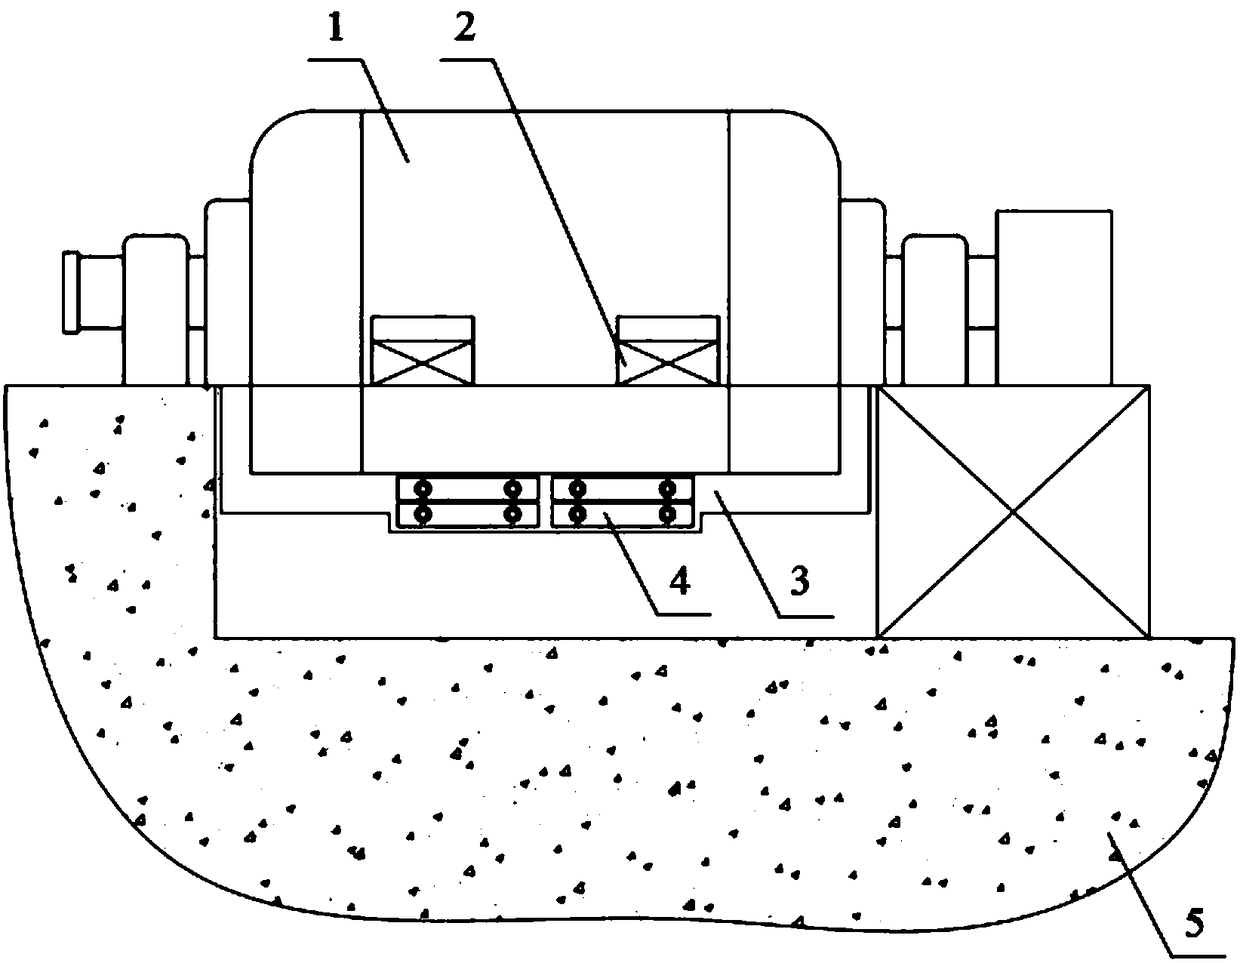 Integrated process method of host heel block and ventilating box